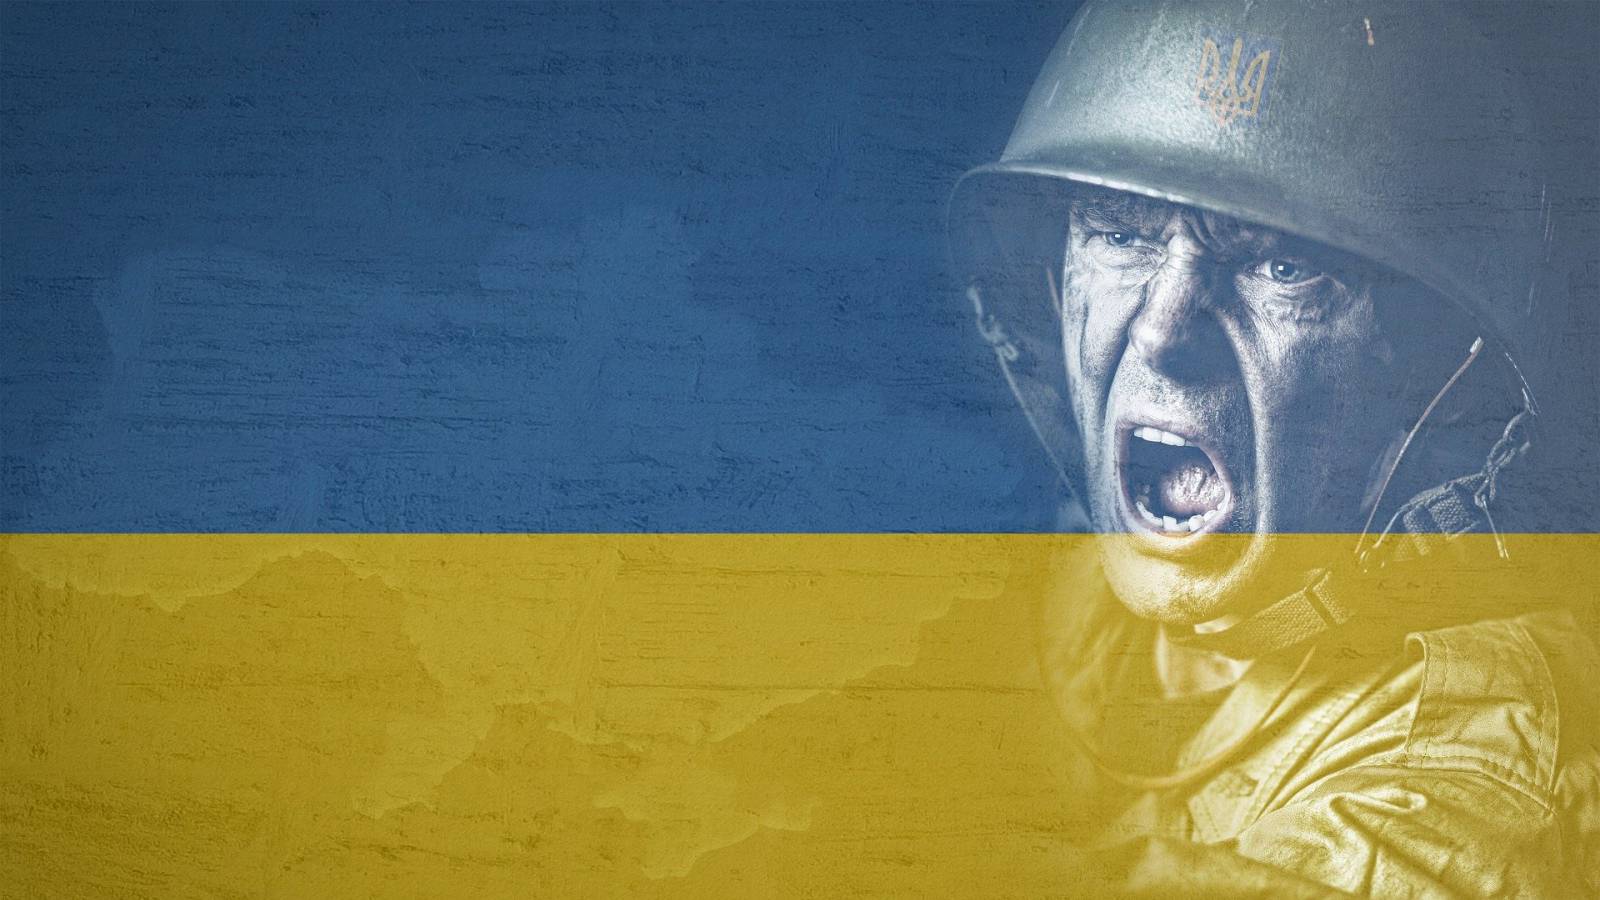 Ucraina a Eliberat 53 de Localitati din Herson in Urma Contraofensivelor